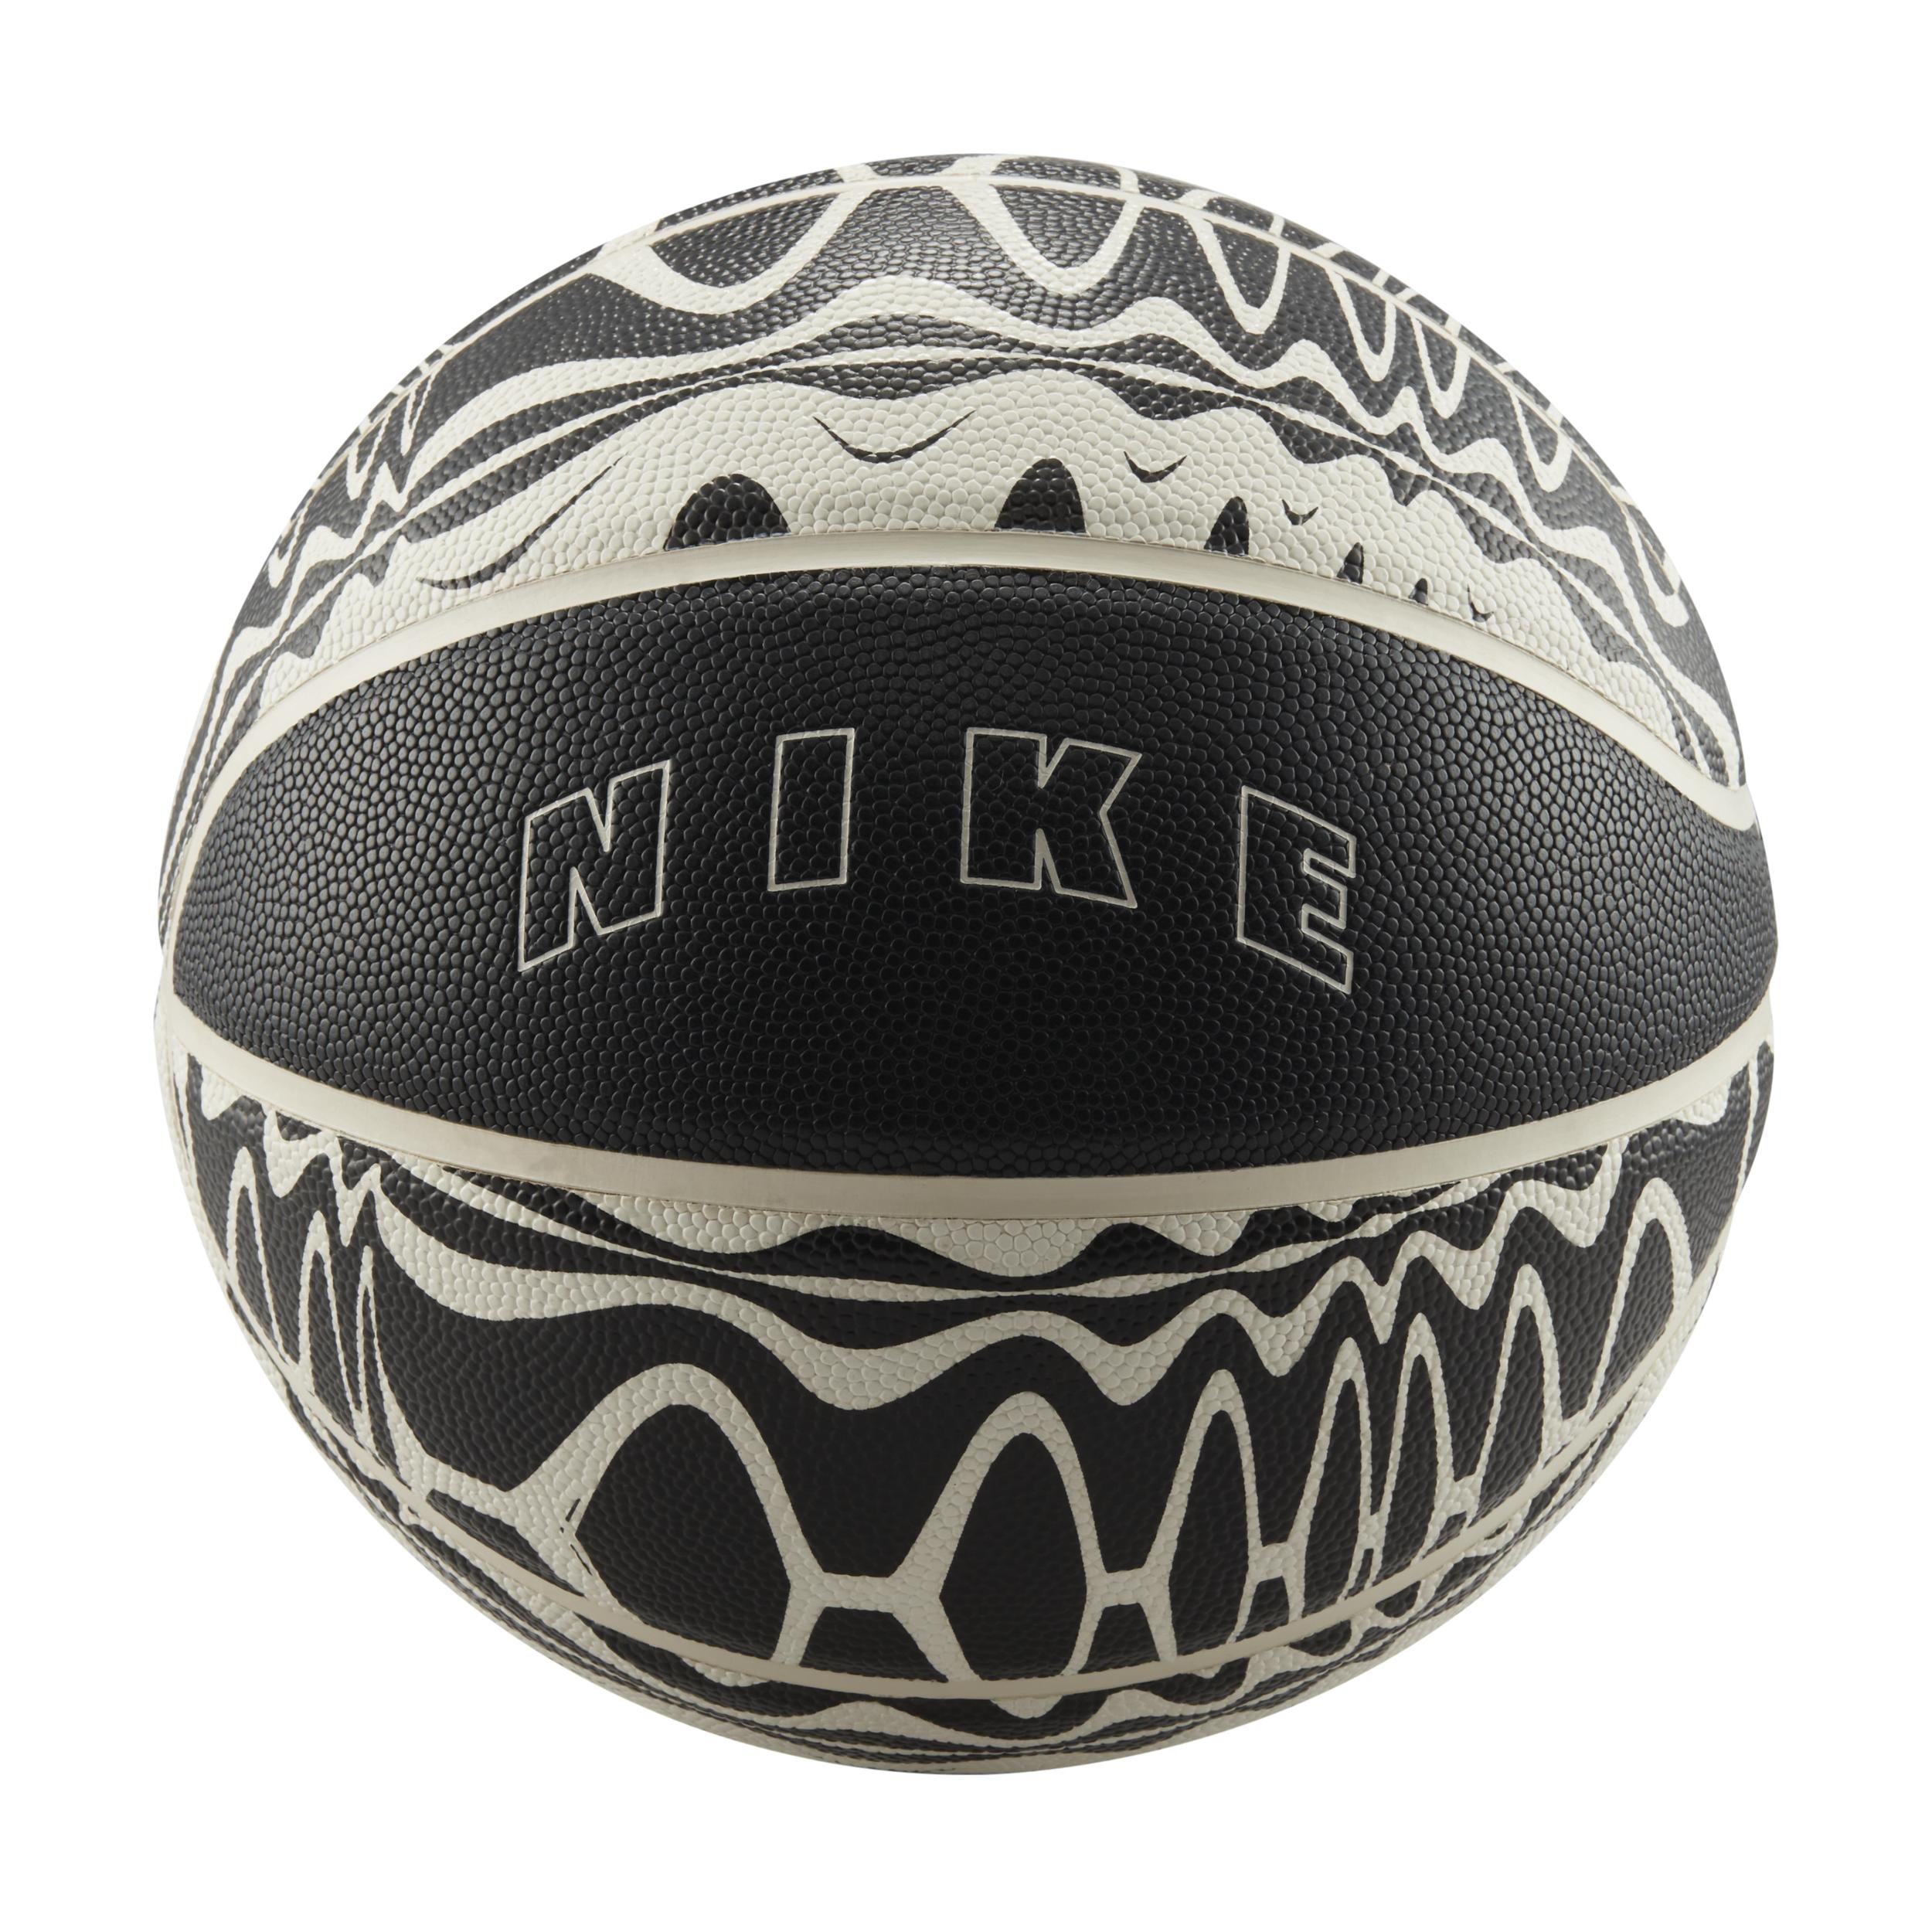 Nike Premium Energy 8-Panel Basketball by NIKE